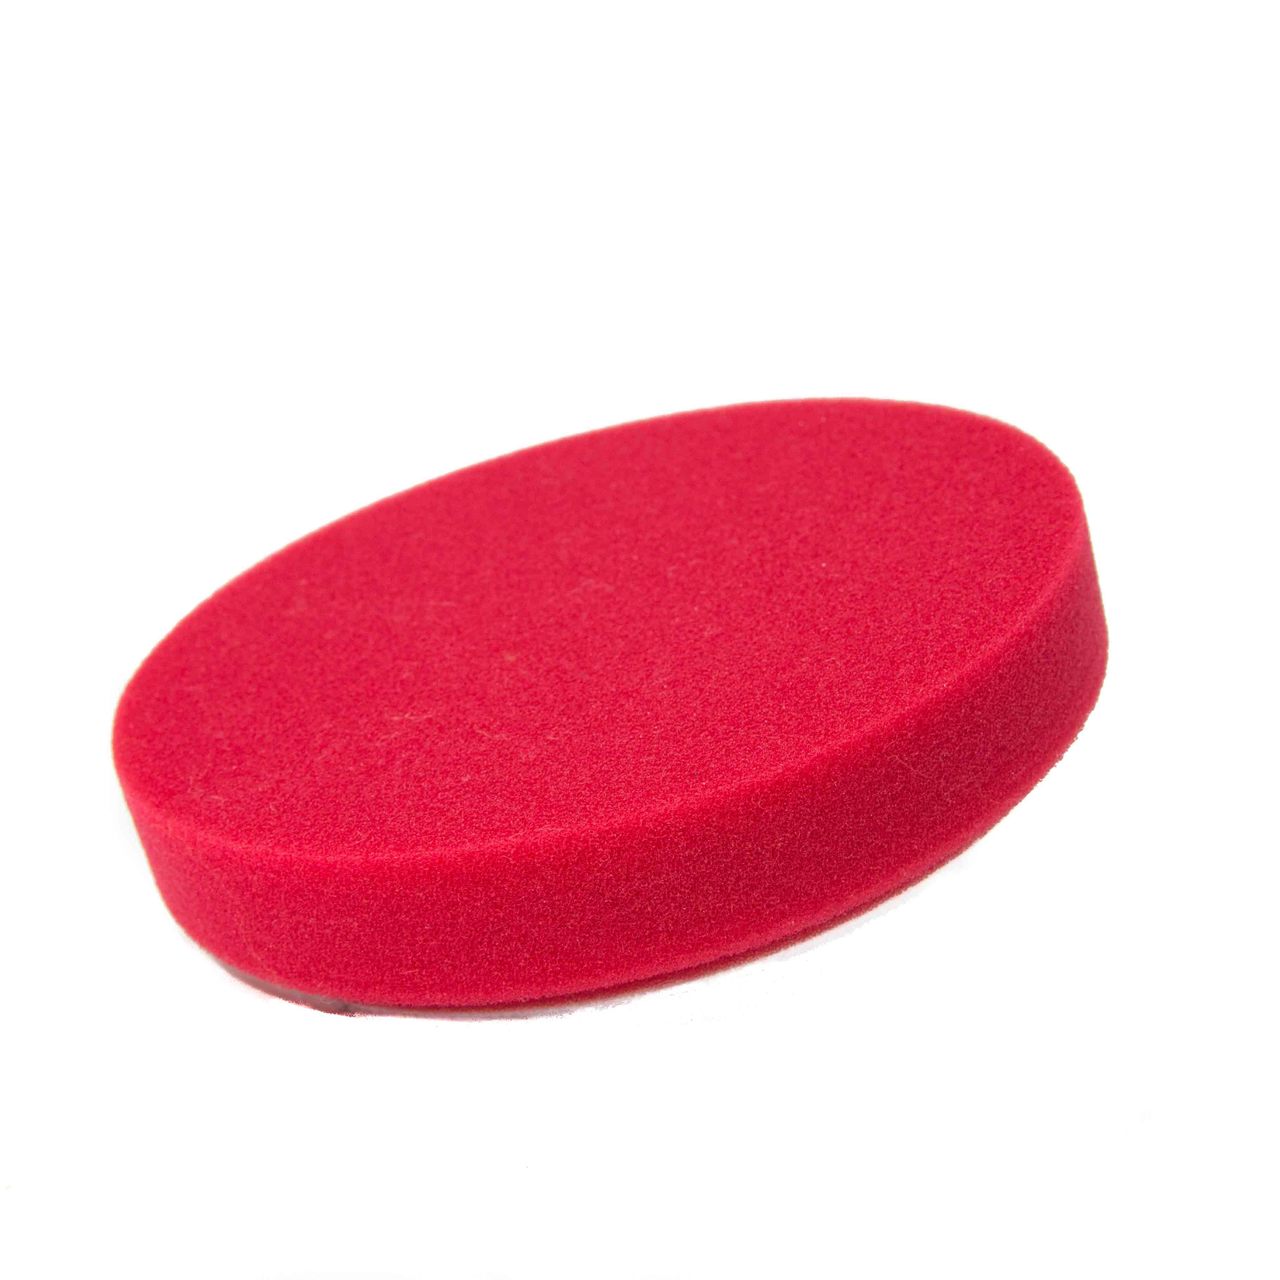 5.5 Premium Red Foam Applicator Pad (BULK) - Buff and Shine Mfg